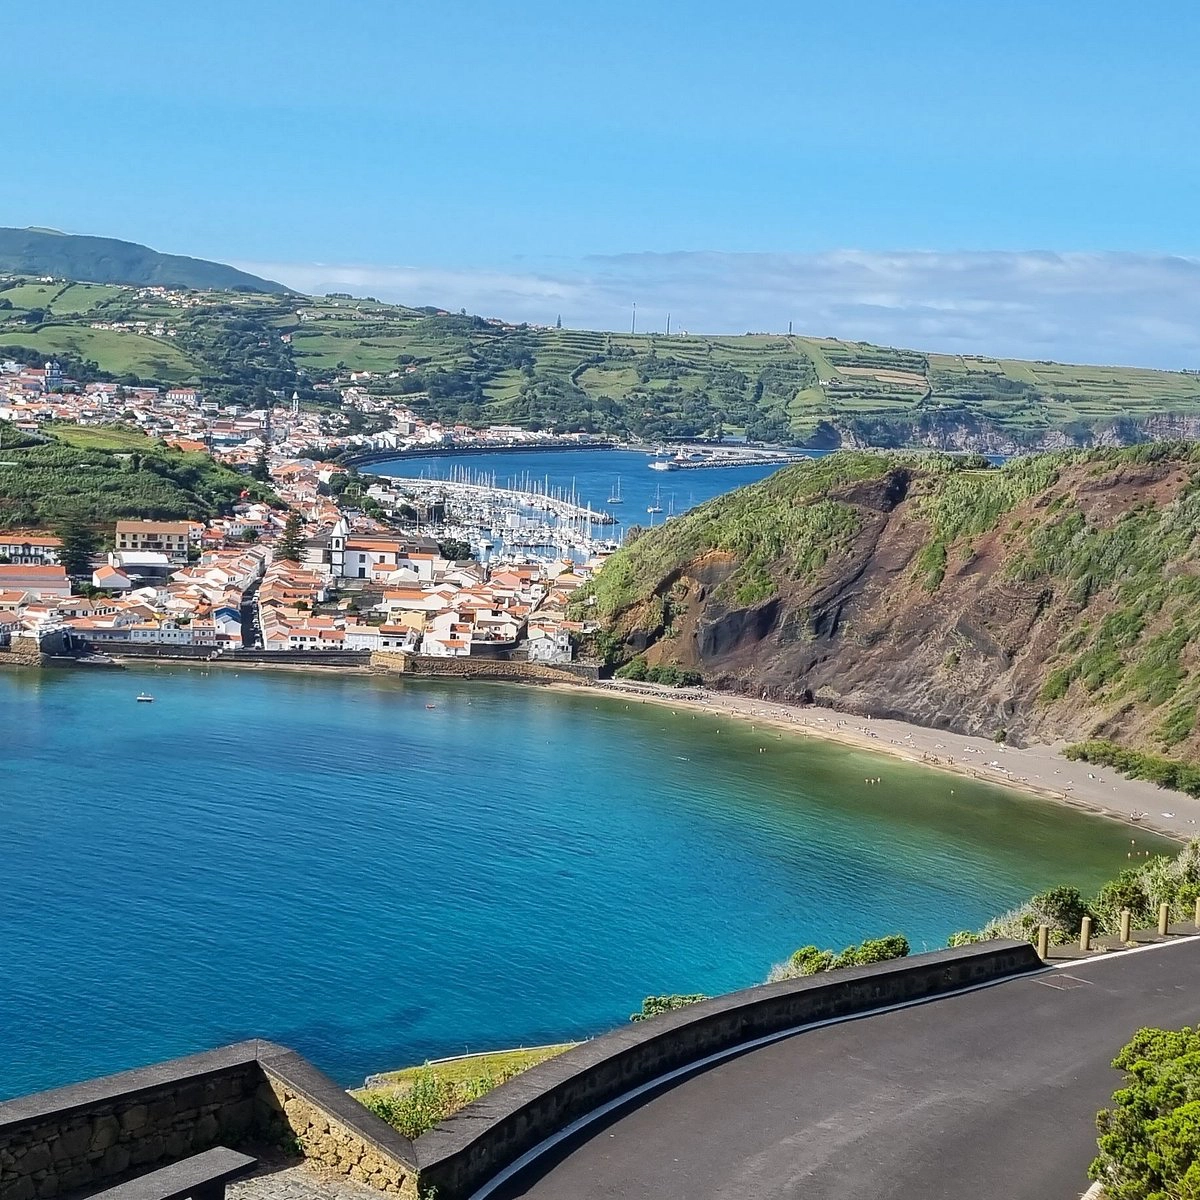  Porto Pim  strand - Azores